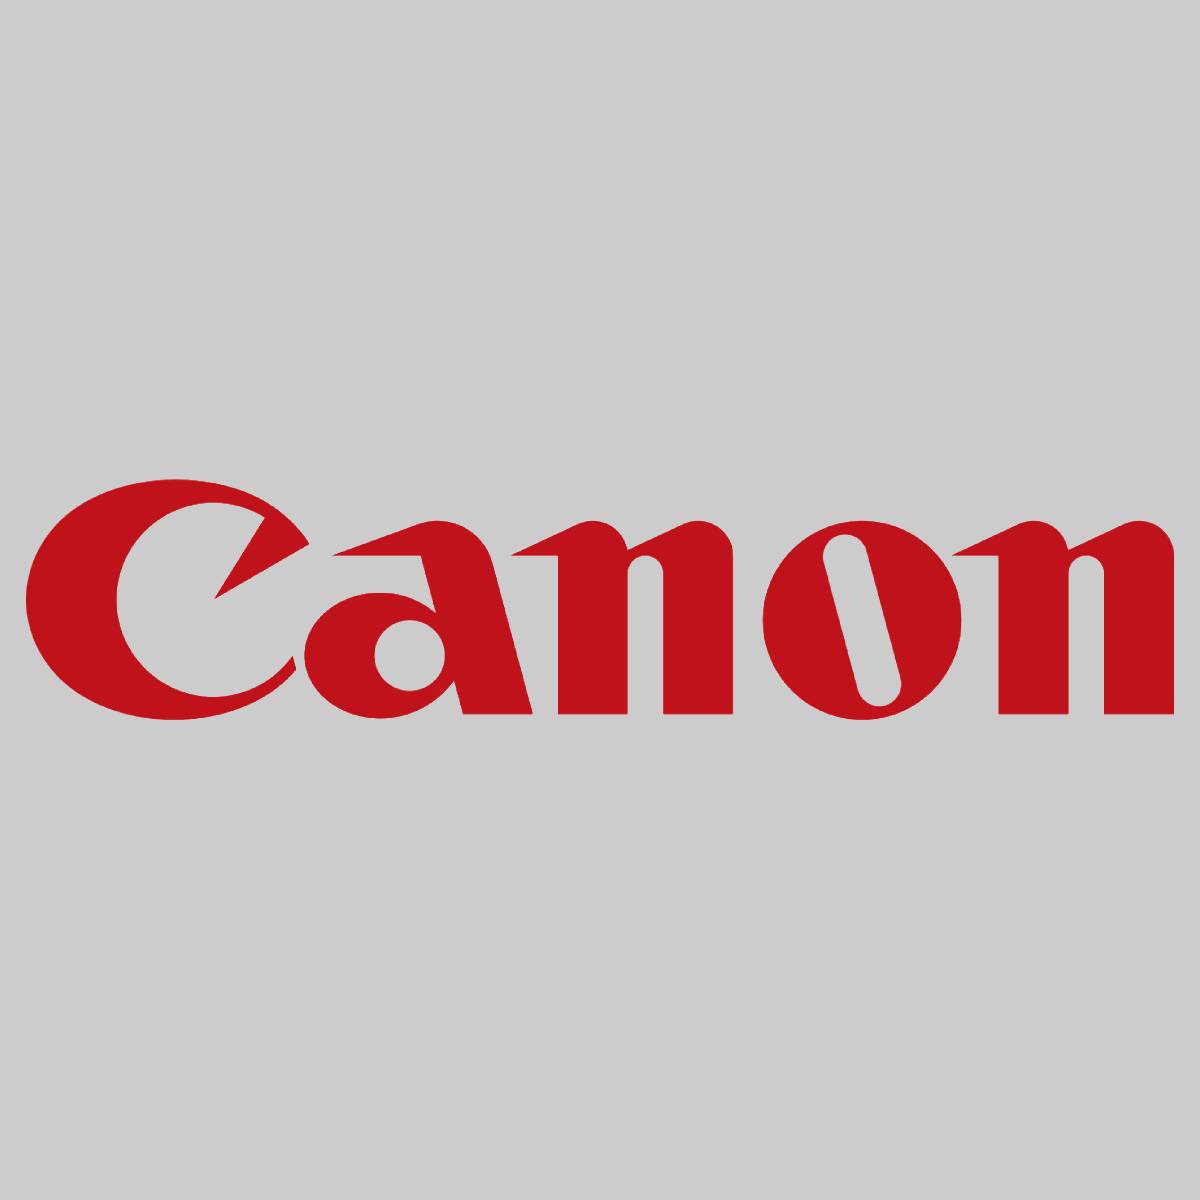 "Original Canon Fixing Drive Assy FM0-0071-000 iR Adv C356iF C355iF C350P NEU